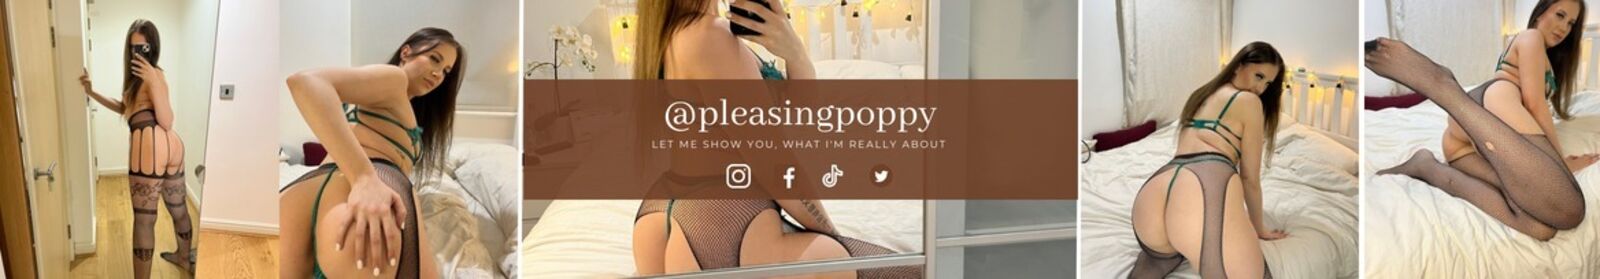 See Pleasing.Poppy profile